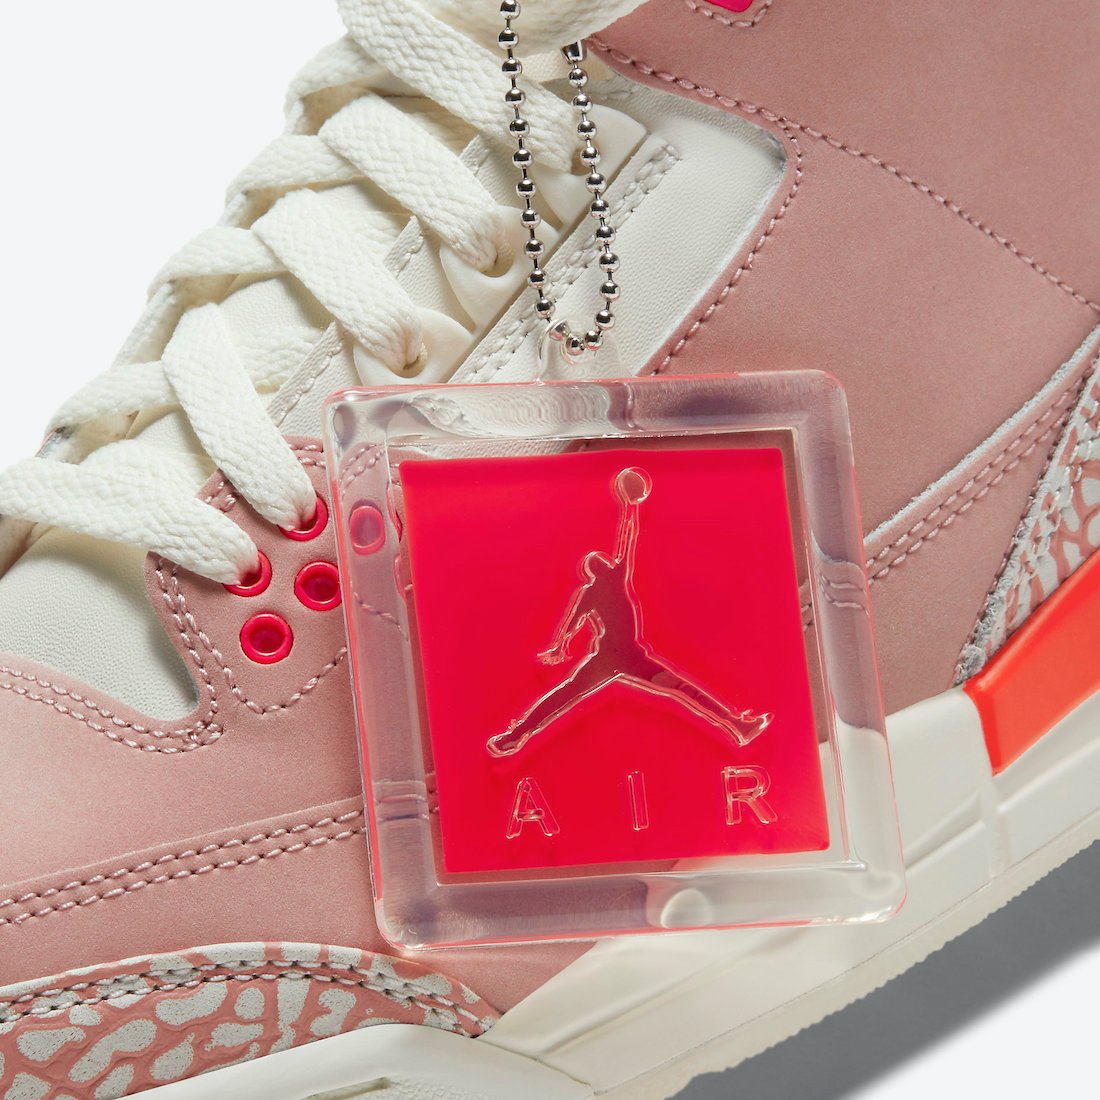 Air Jordan 3 Rust Pink Crimson CK9246-600 Release Date Info